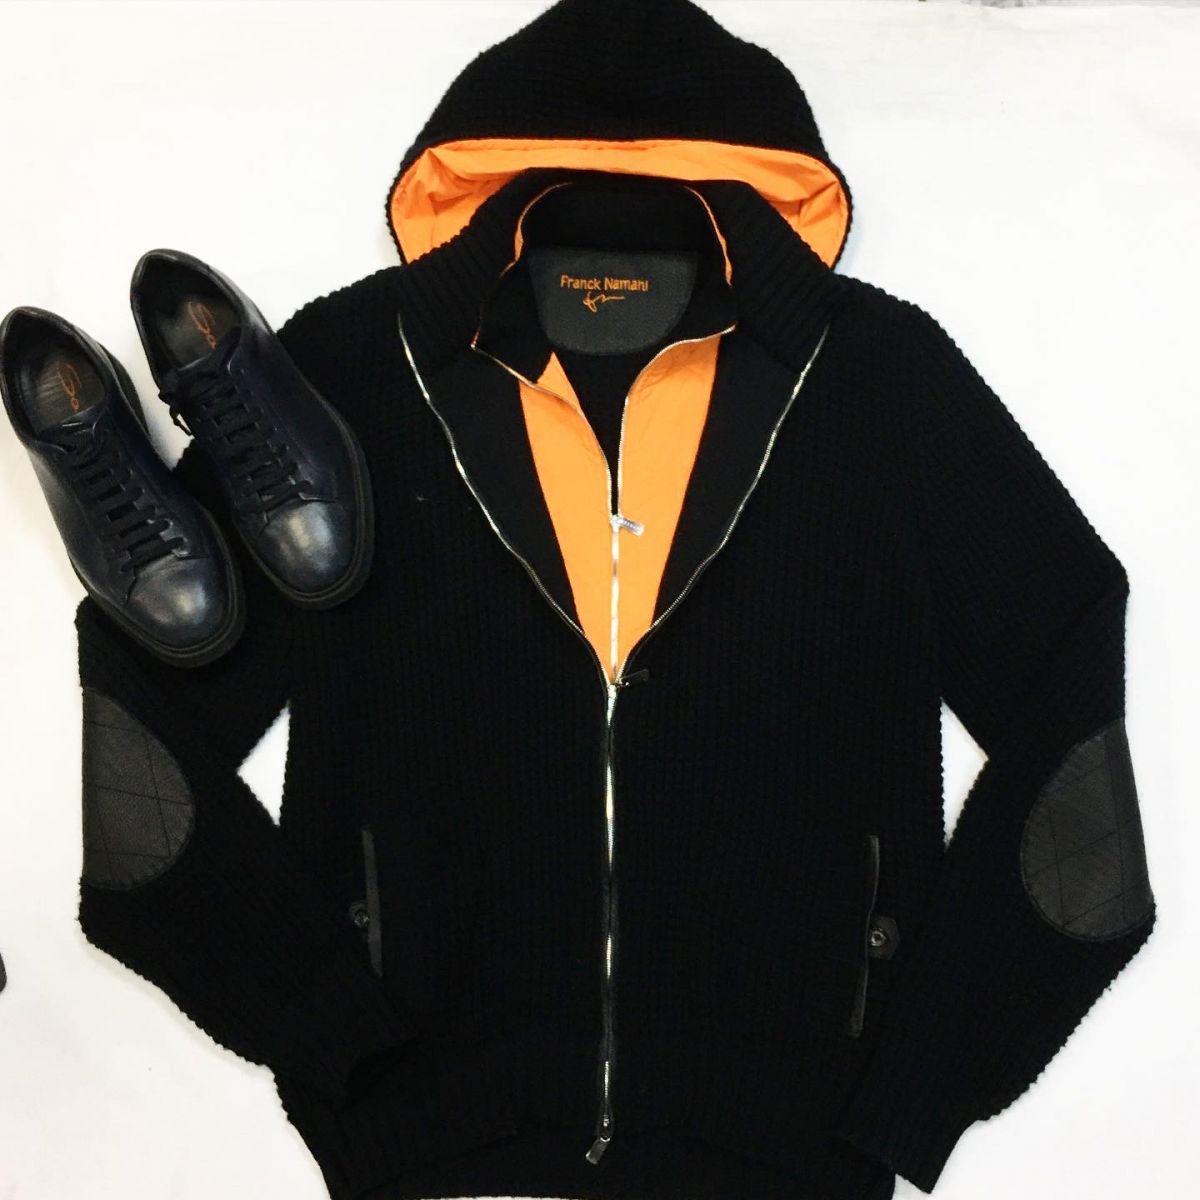 Куртка -кашемир/ Frank Namani размер 56 цена 30 770 руб 